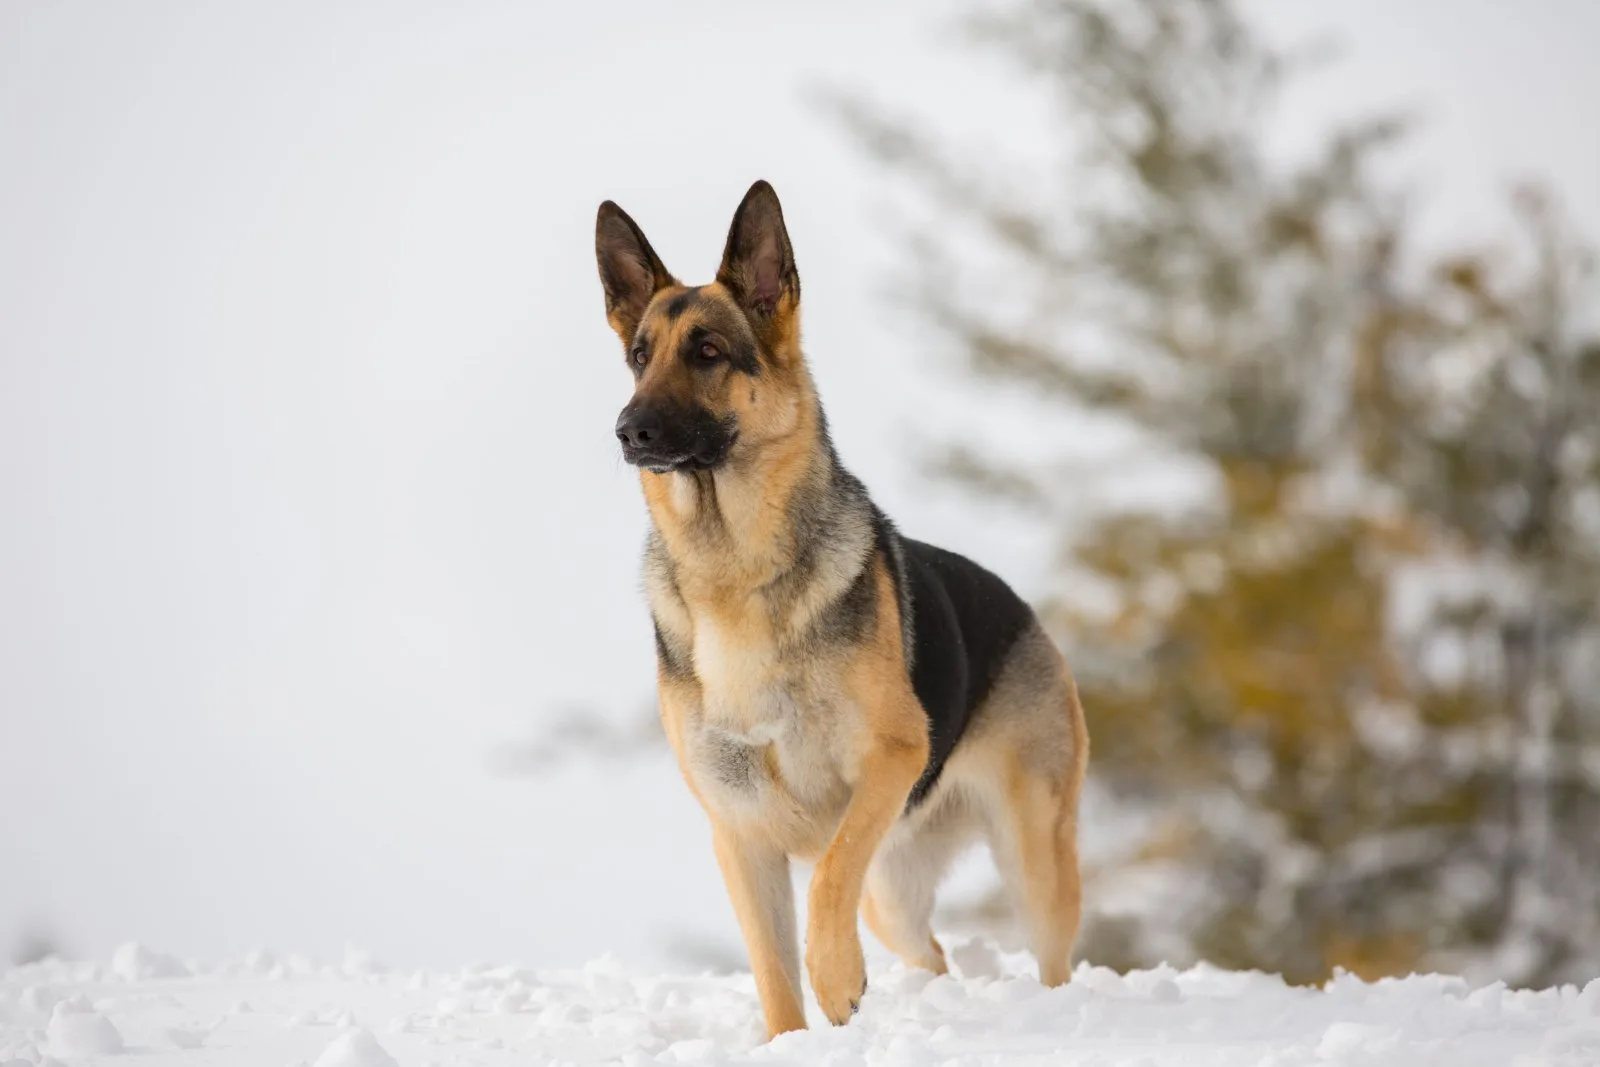 A German Shepherd standing in the snow